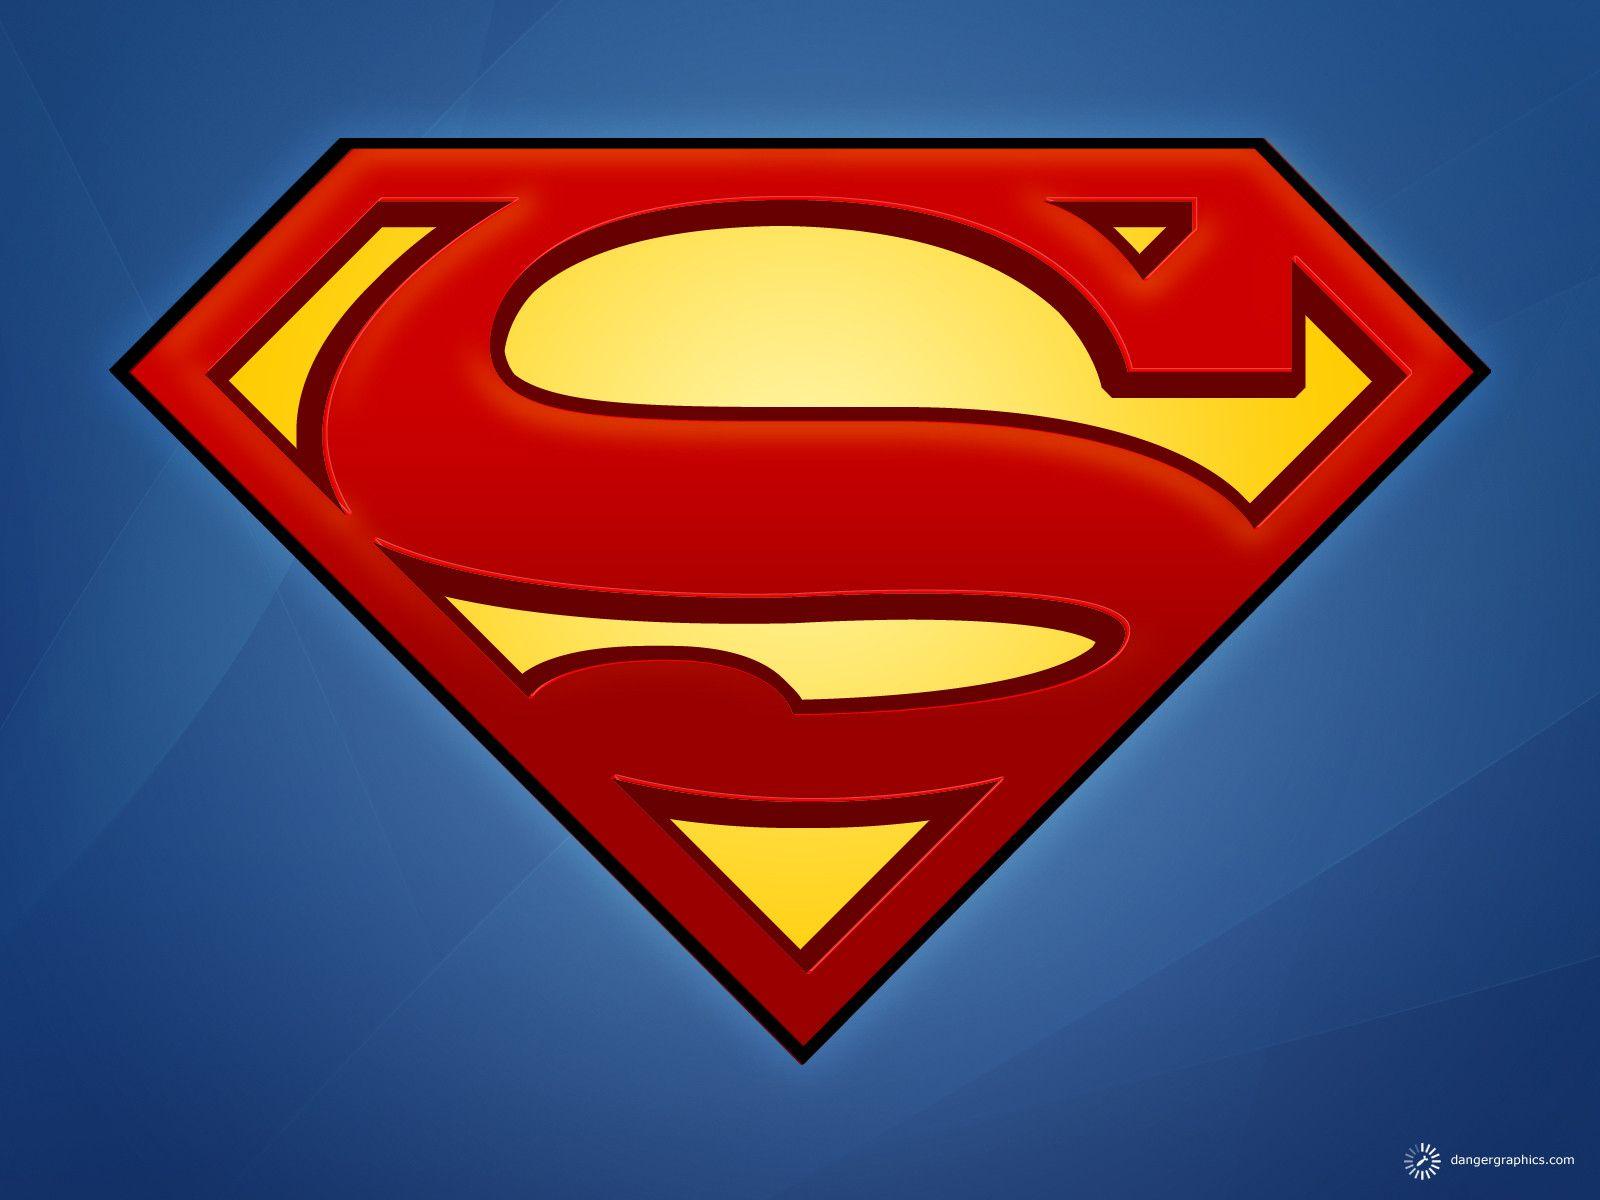 superman wallpaper,superman,superhero,fictional character,justice league,symbol